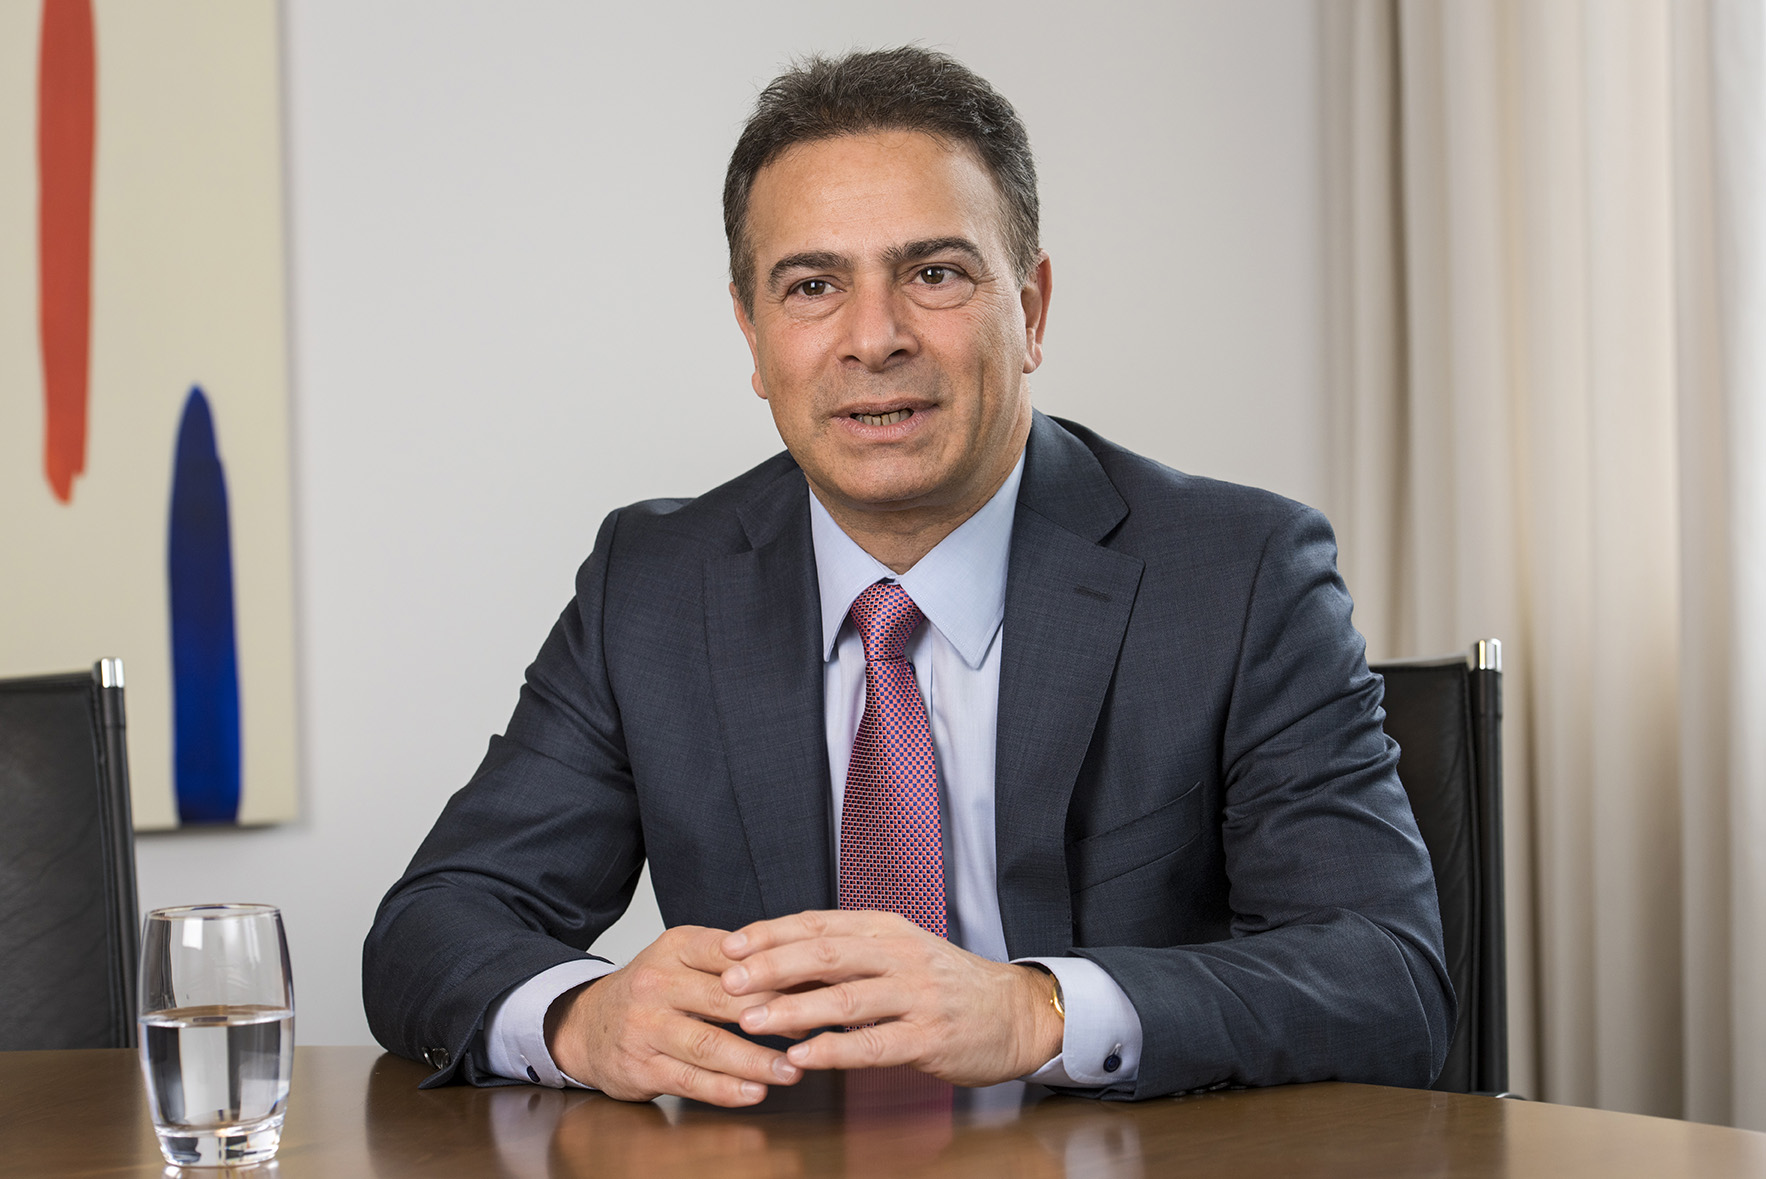 Freudenberg Group CEO, Dr. Mohsen Sohi